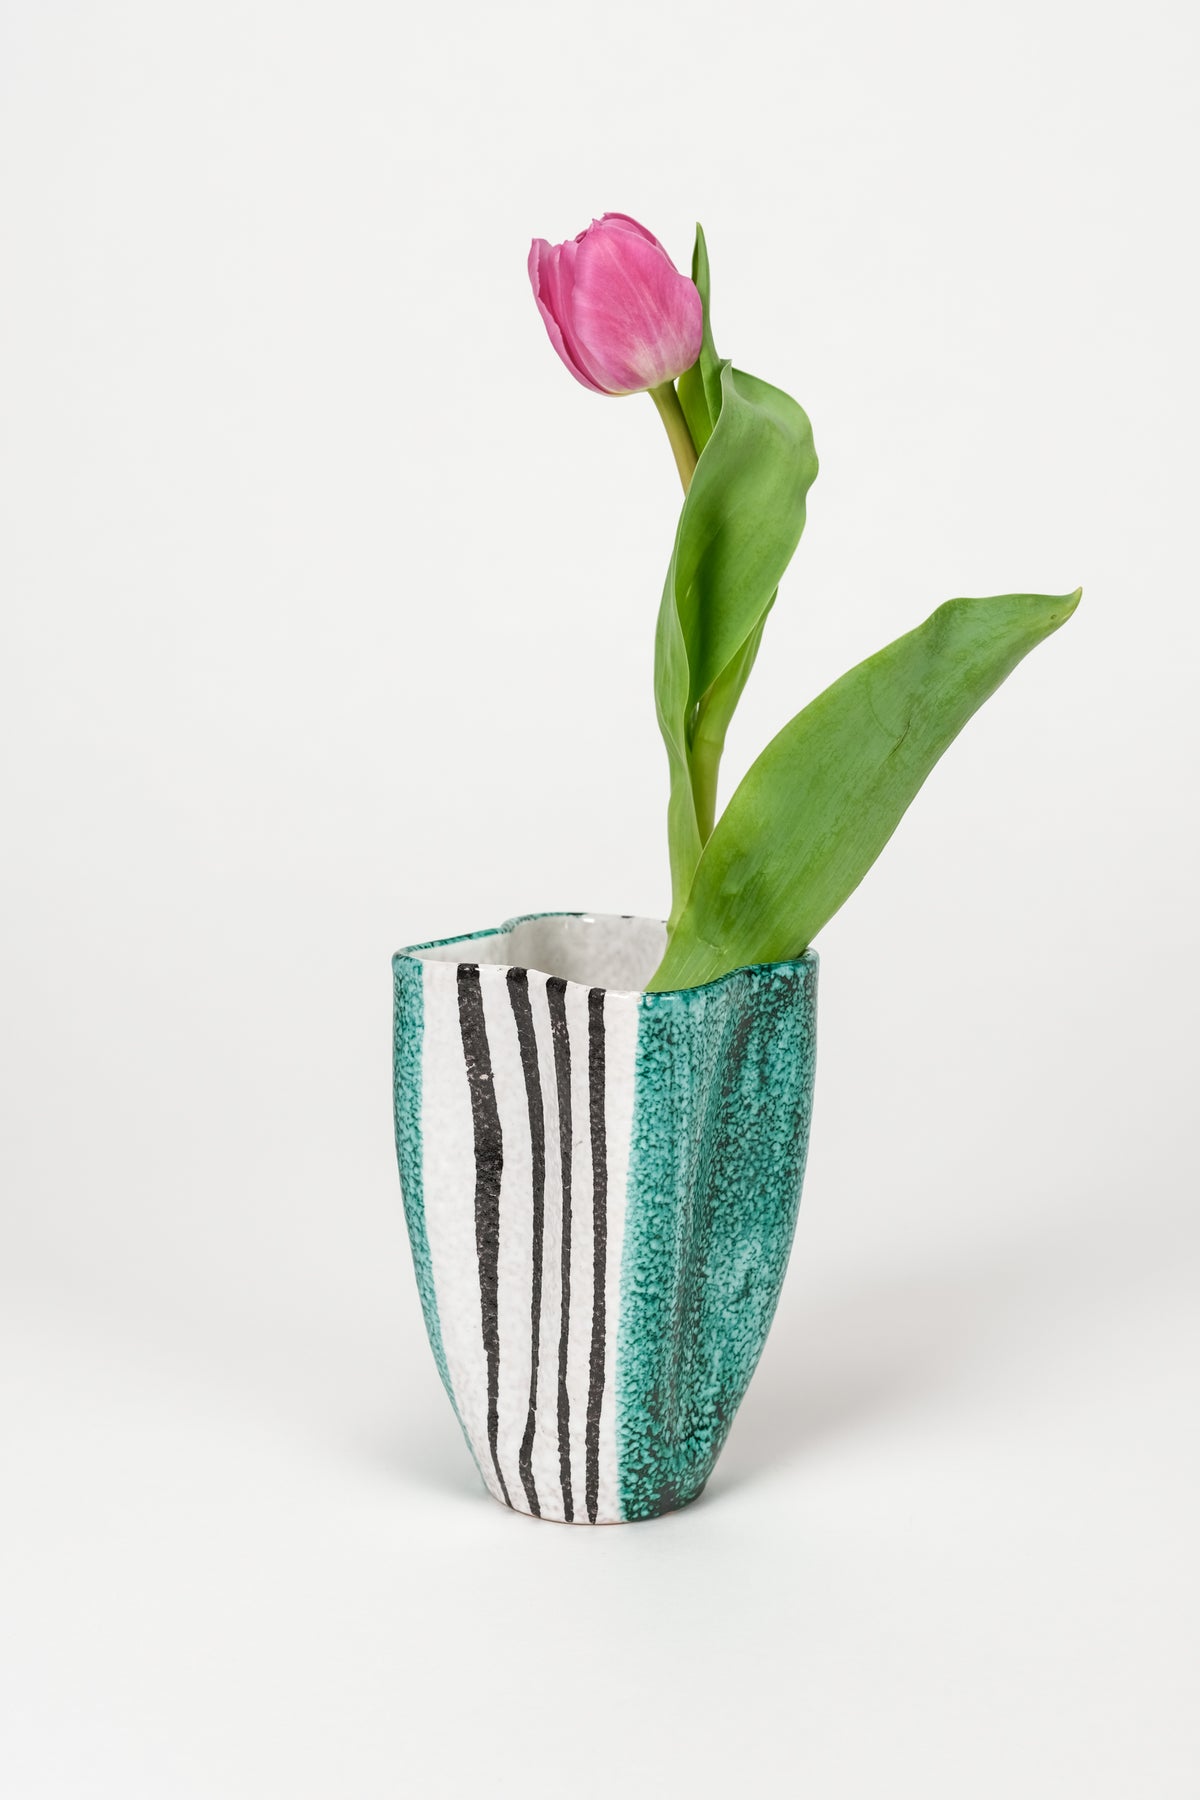 Alvino Bagni Vase, Keramik, 50er